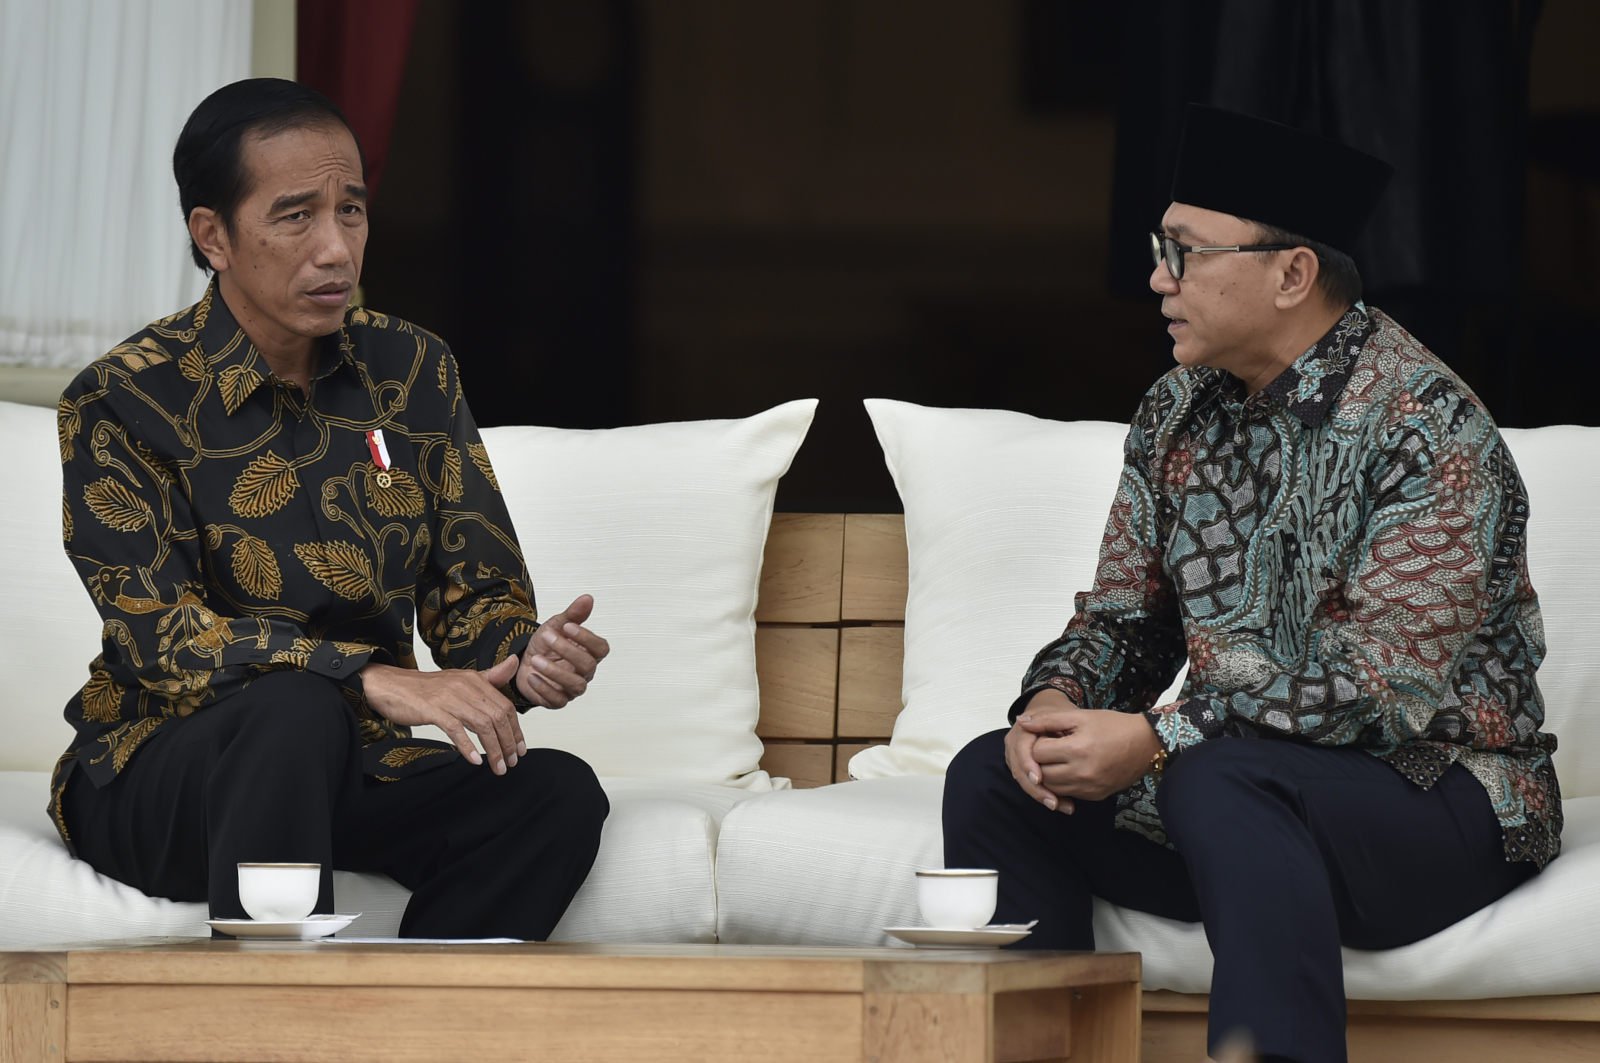 Dokumentasi pertemuan Presiden Joko Widodo (kiri) berbincang dengan Ketua Umum Partai Amanat Nasional Zulkifli Hasan (kanan) pada 2017 silam. (Foto: dok/antara)